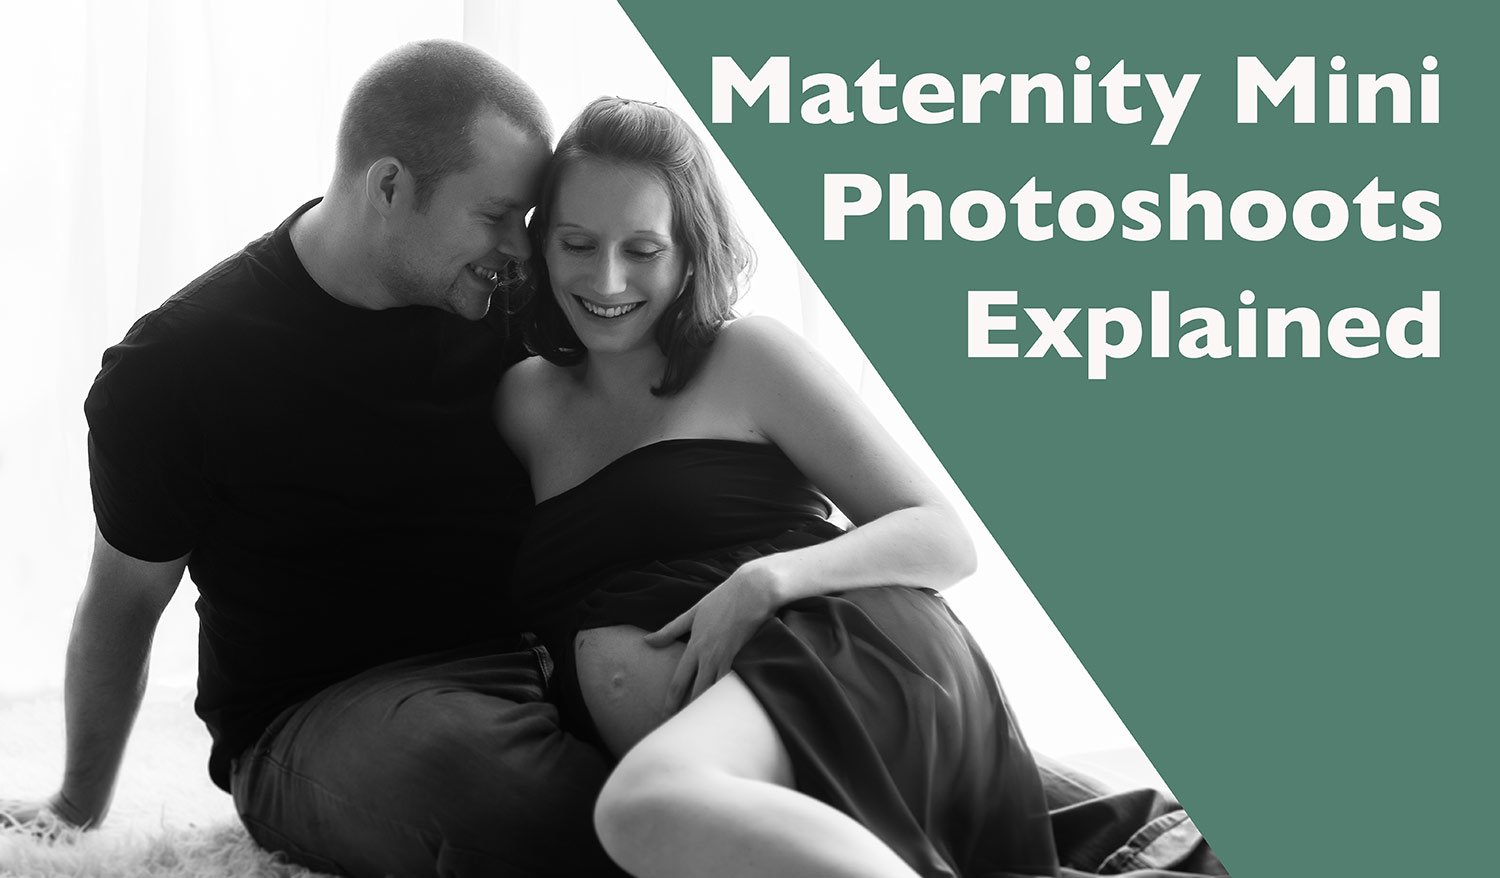 £299 Maternity mini photo shoot explained. 1